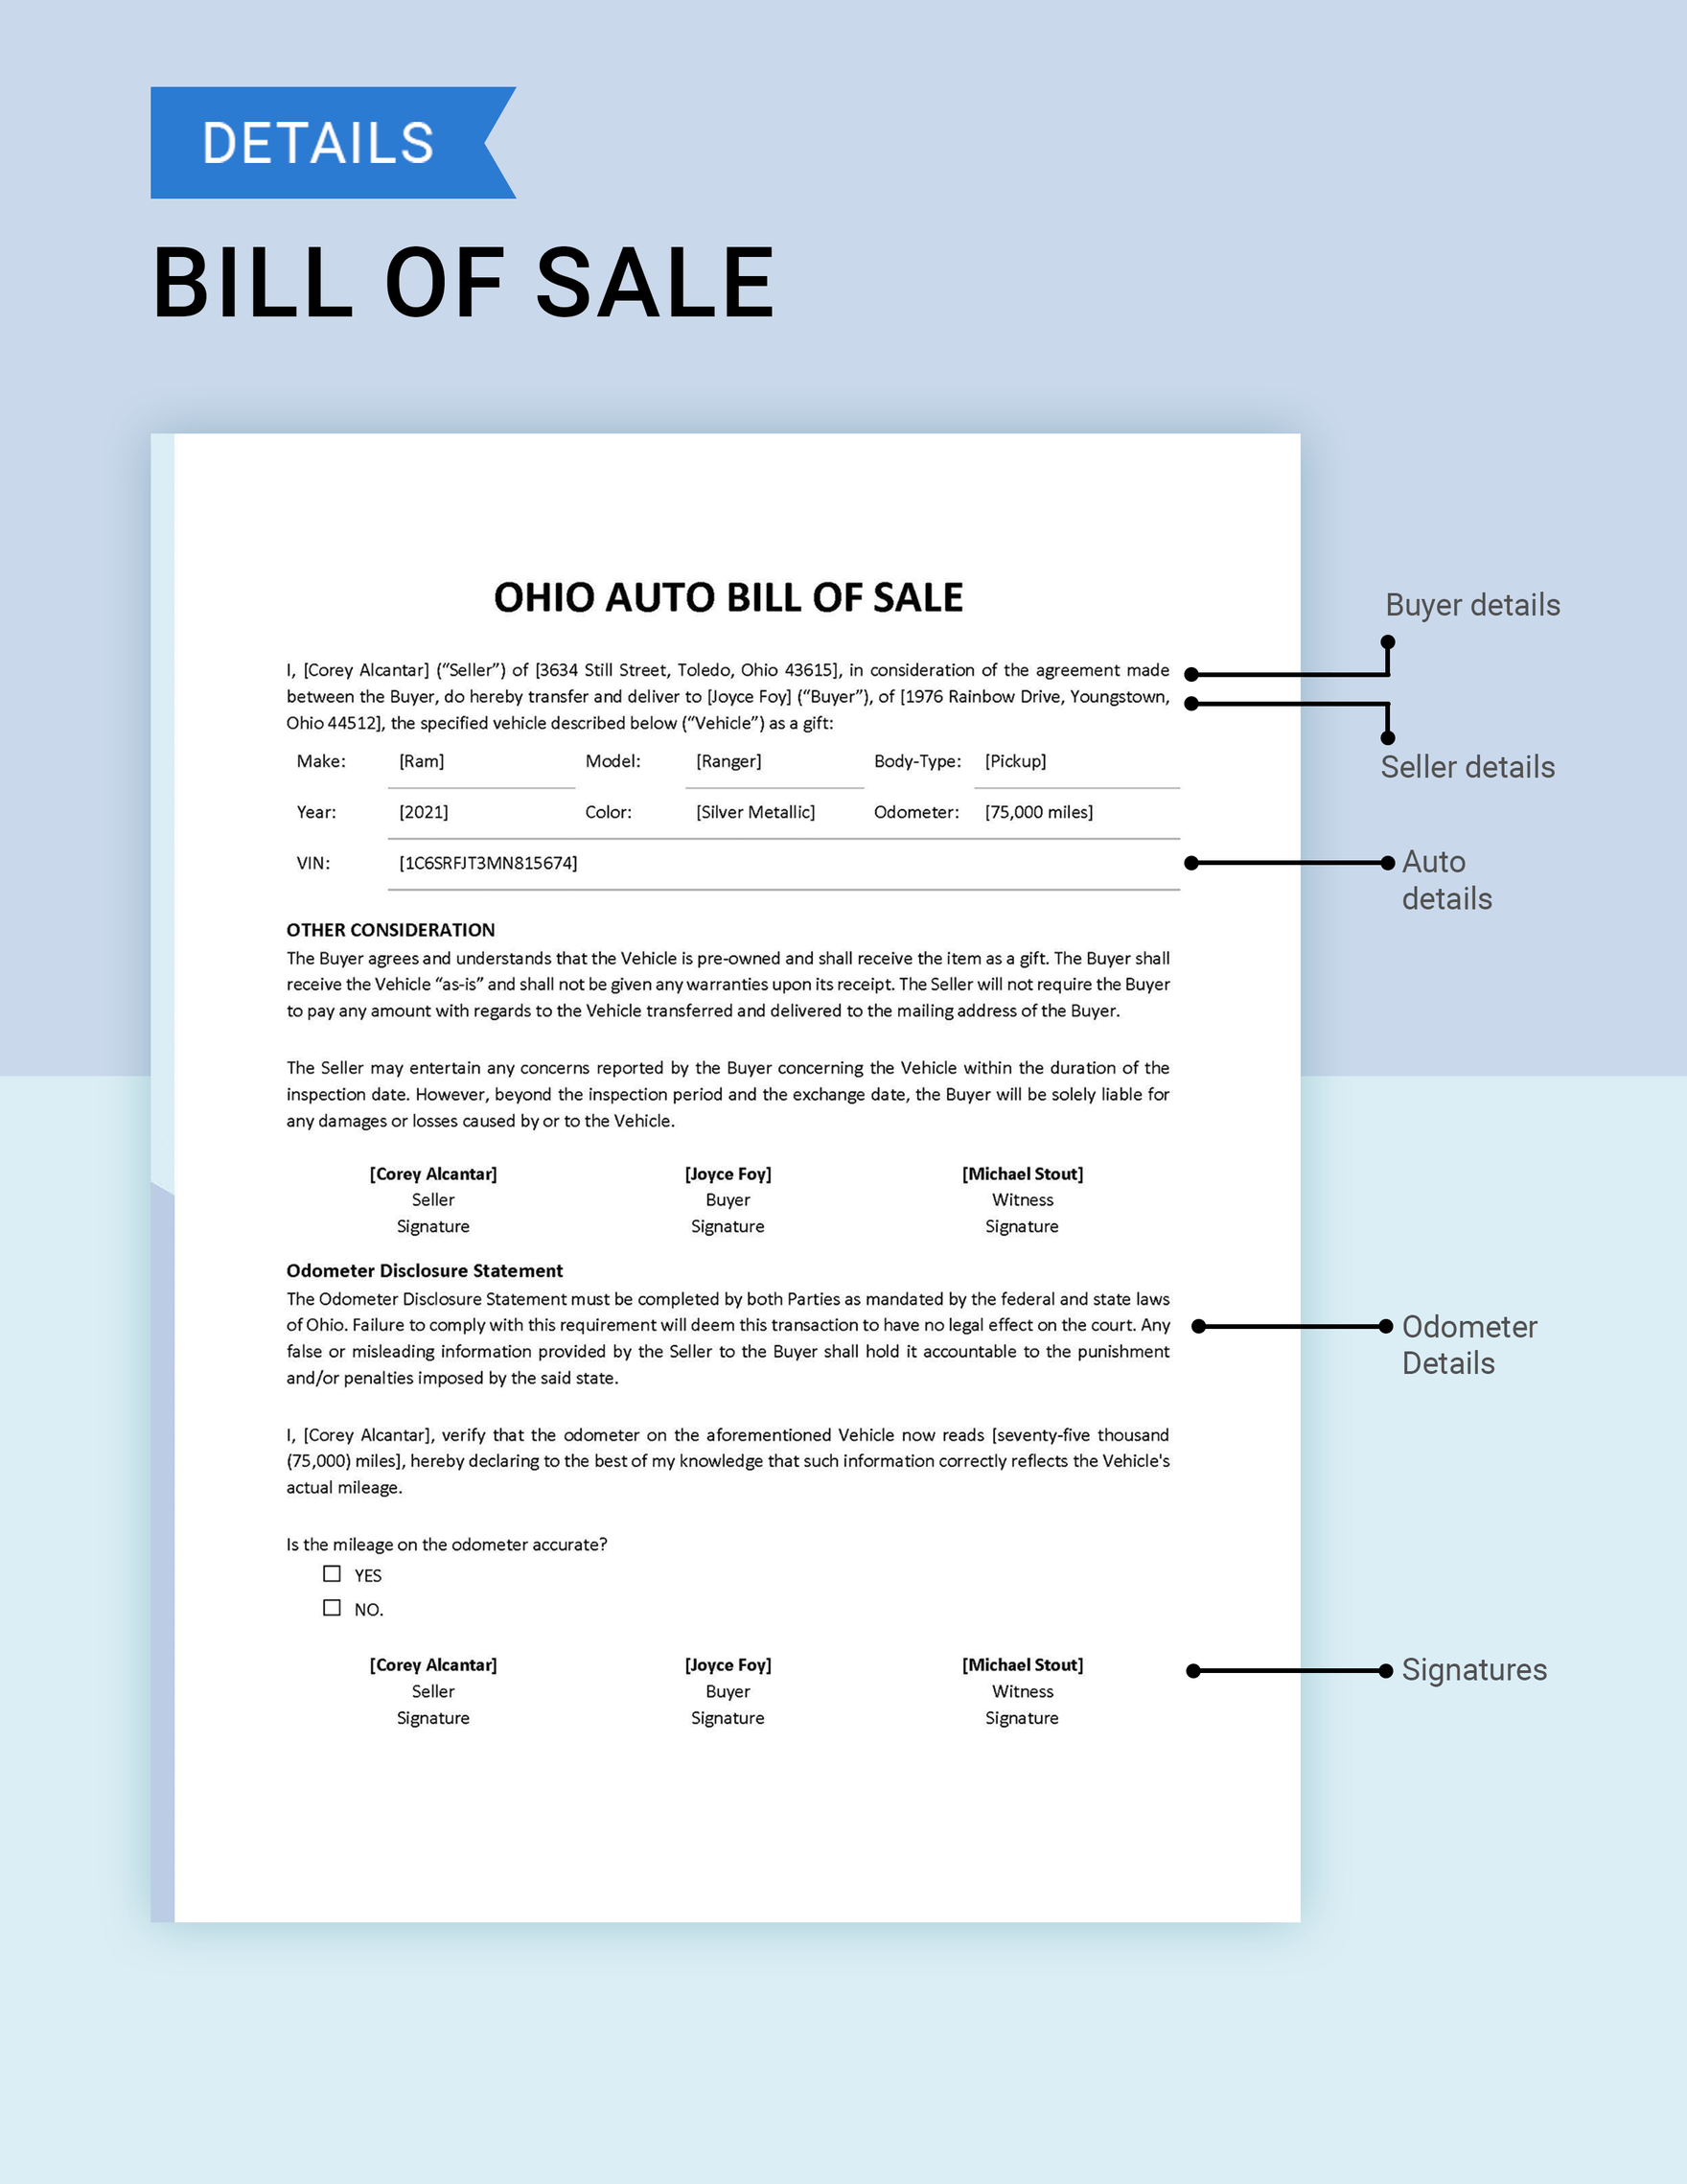 Ohio Auto Bill of Sale Template Download in Word, Google Docs, PDF